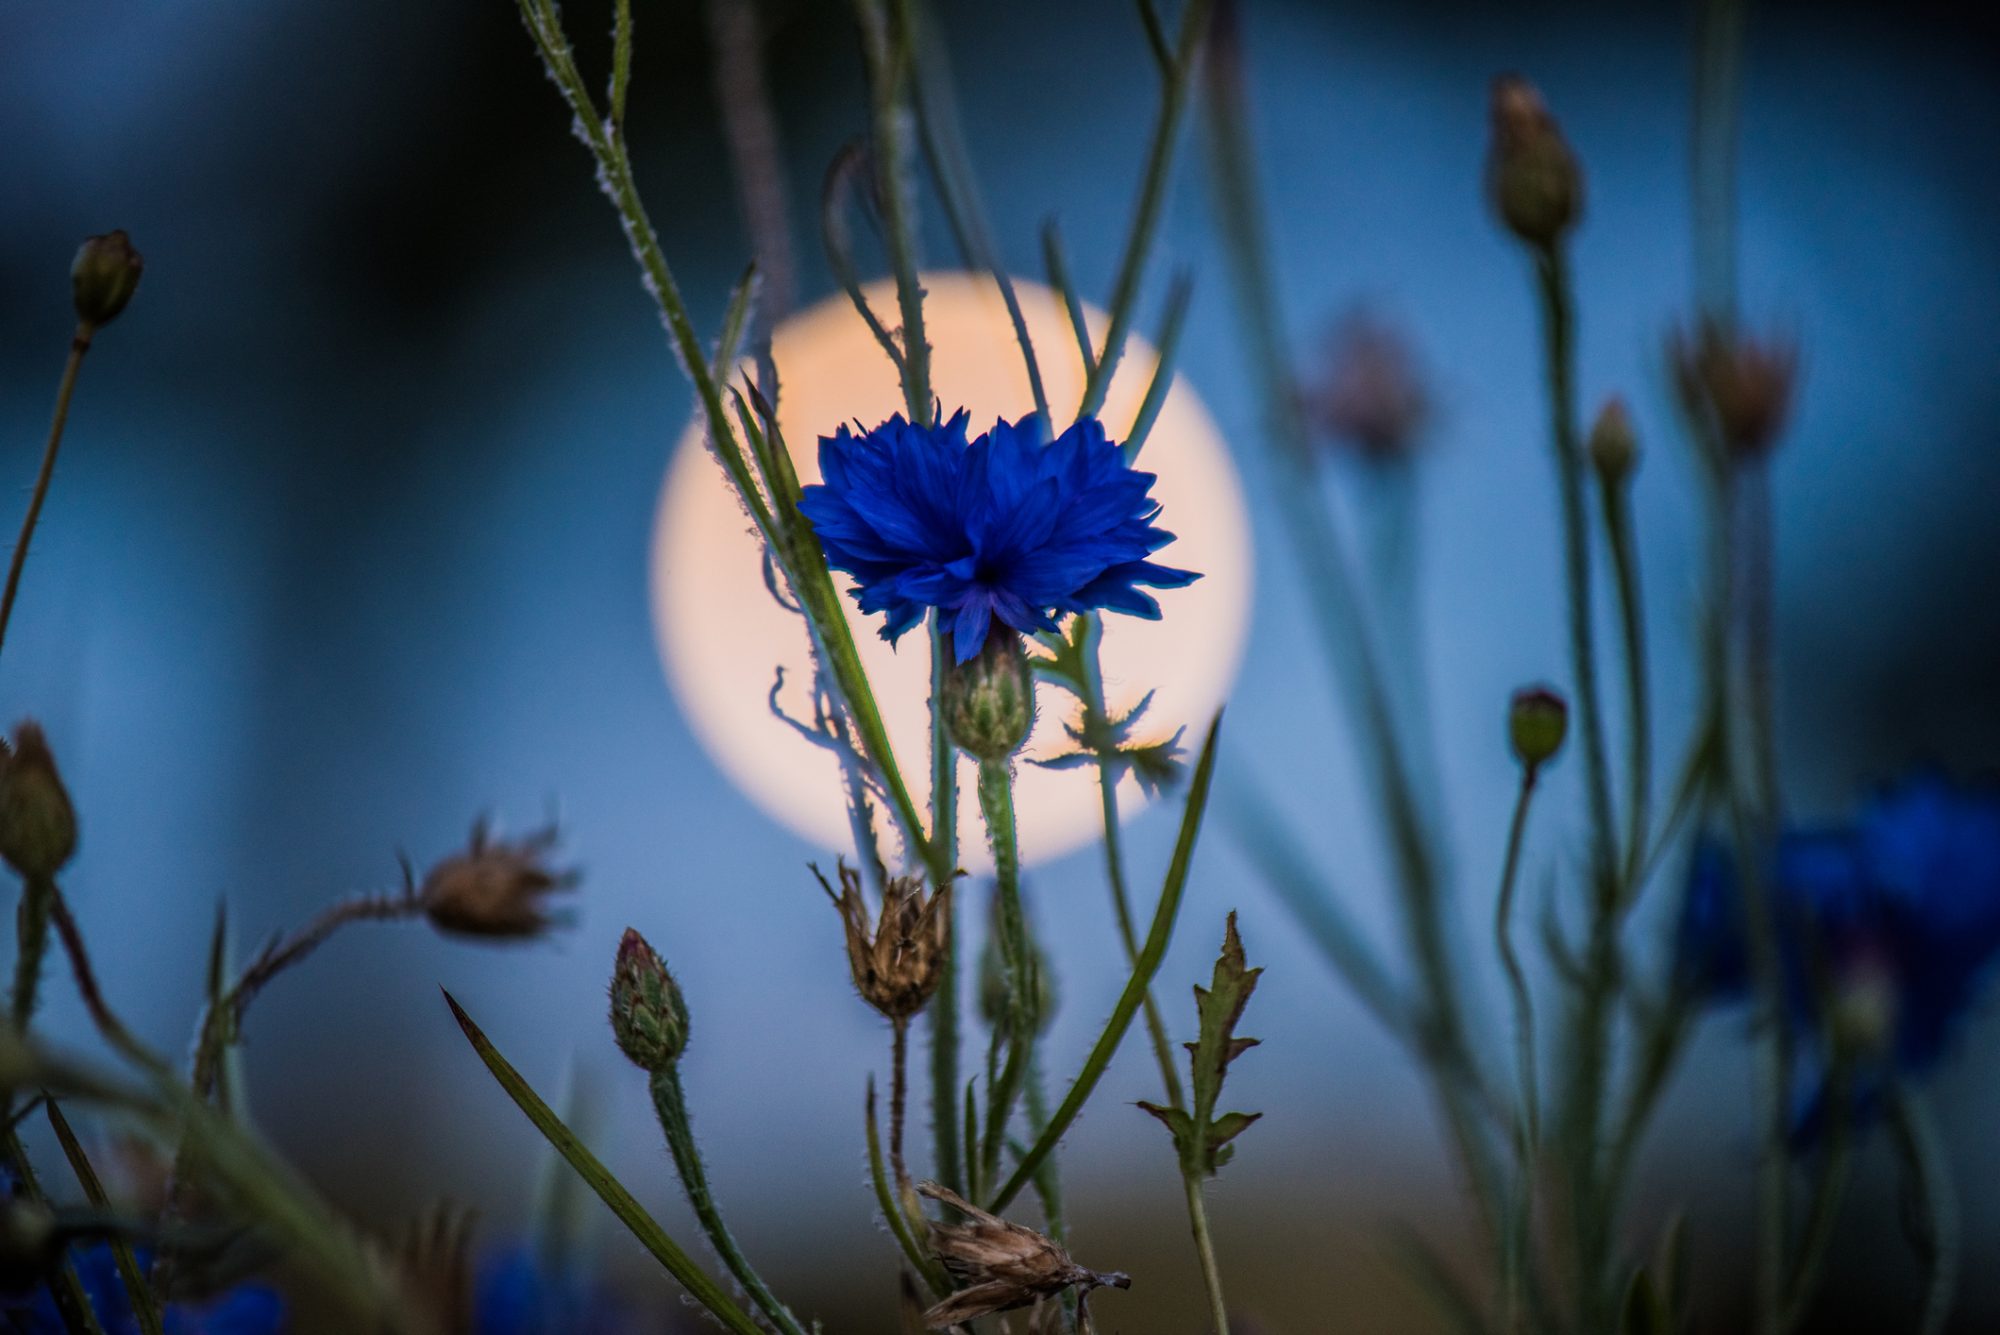 Ritual – Flowering Moon